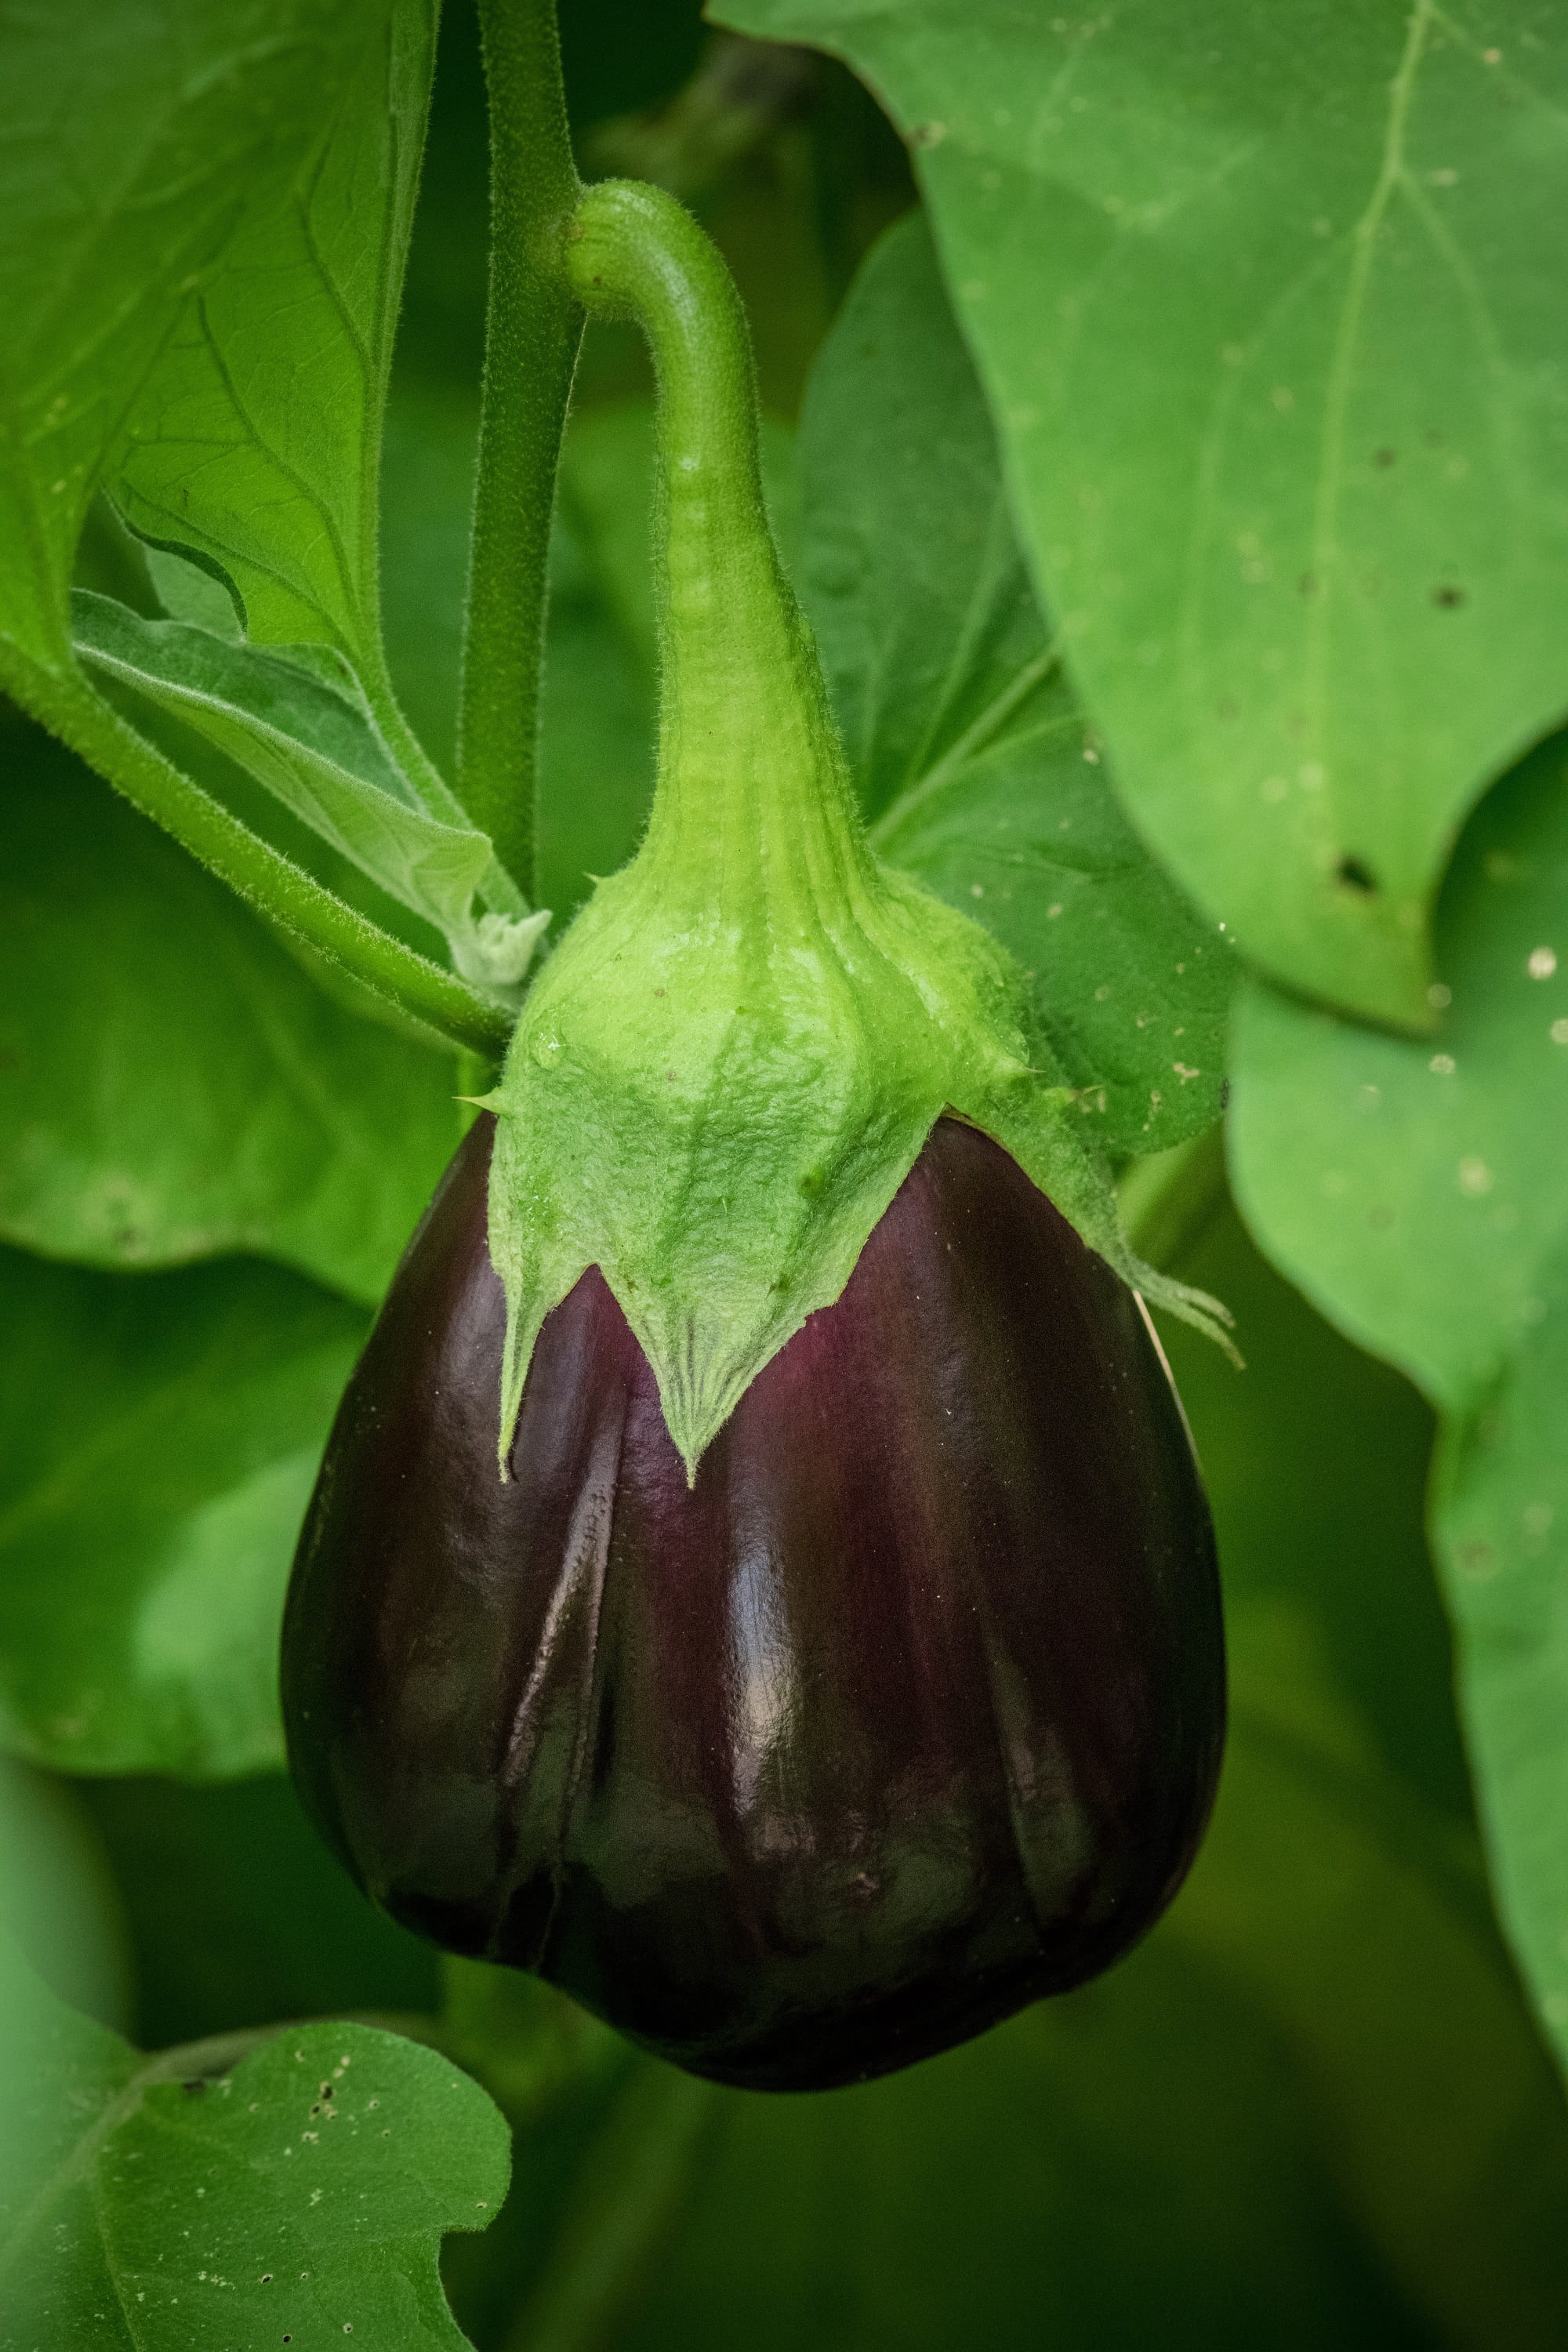 eggplant, aubergine, solanum melongena, raw, fresh, close up